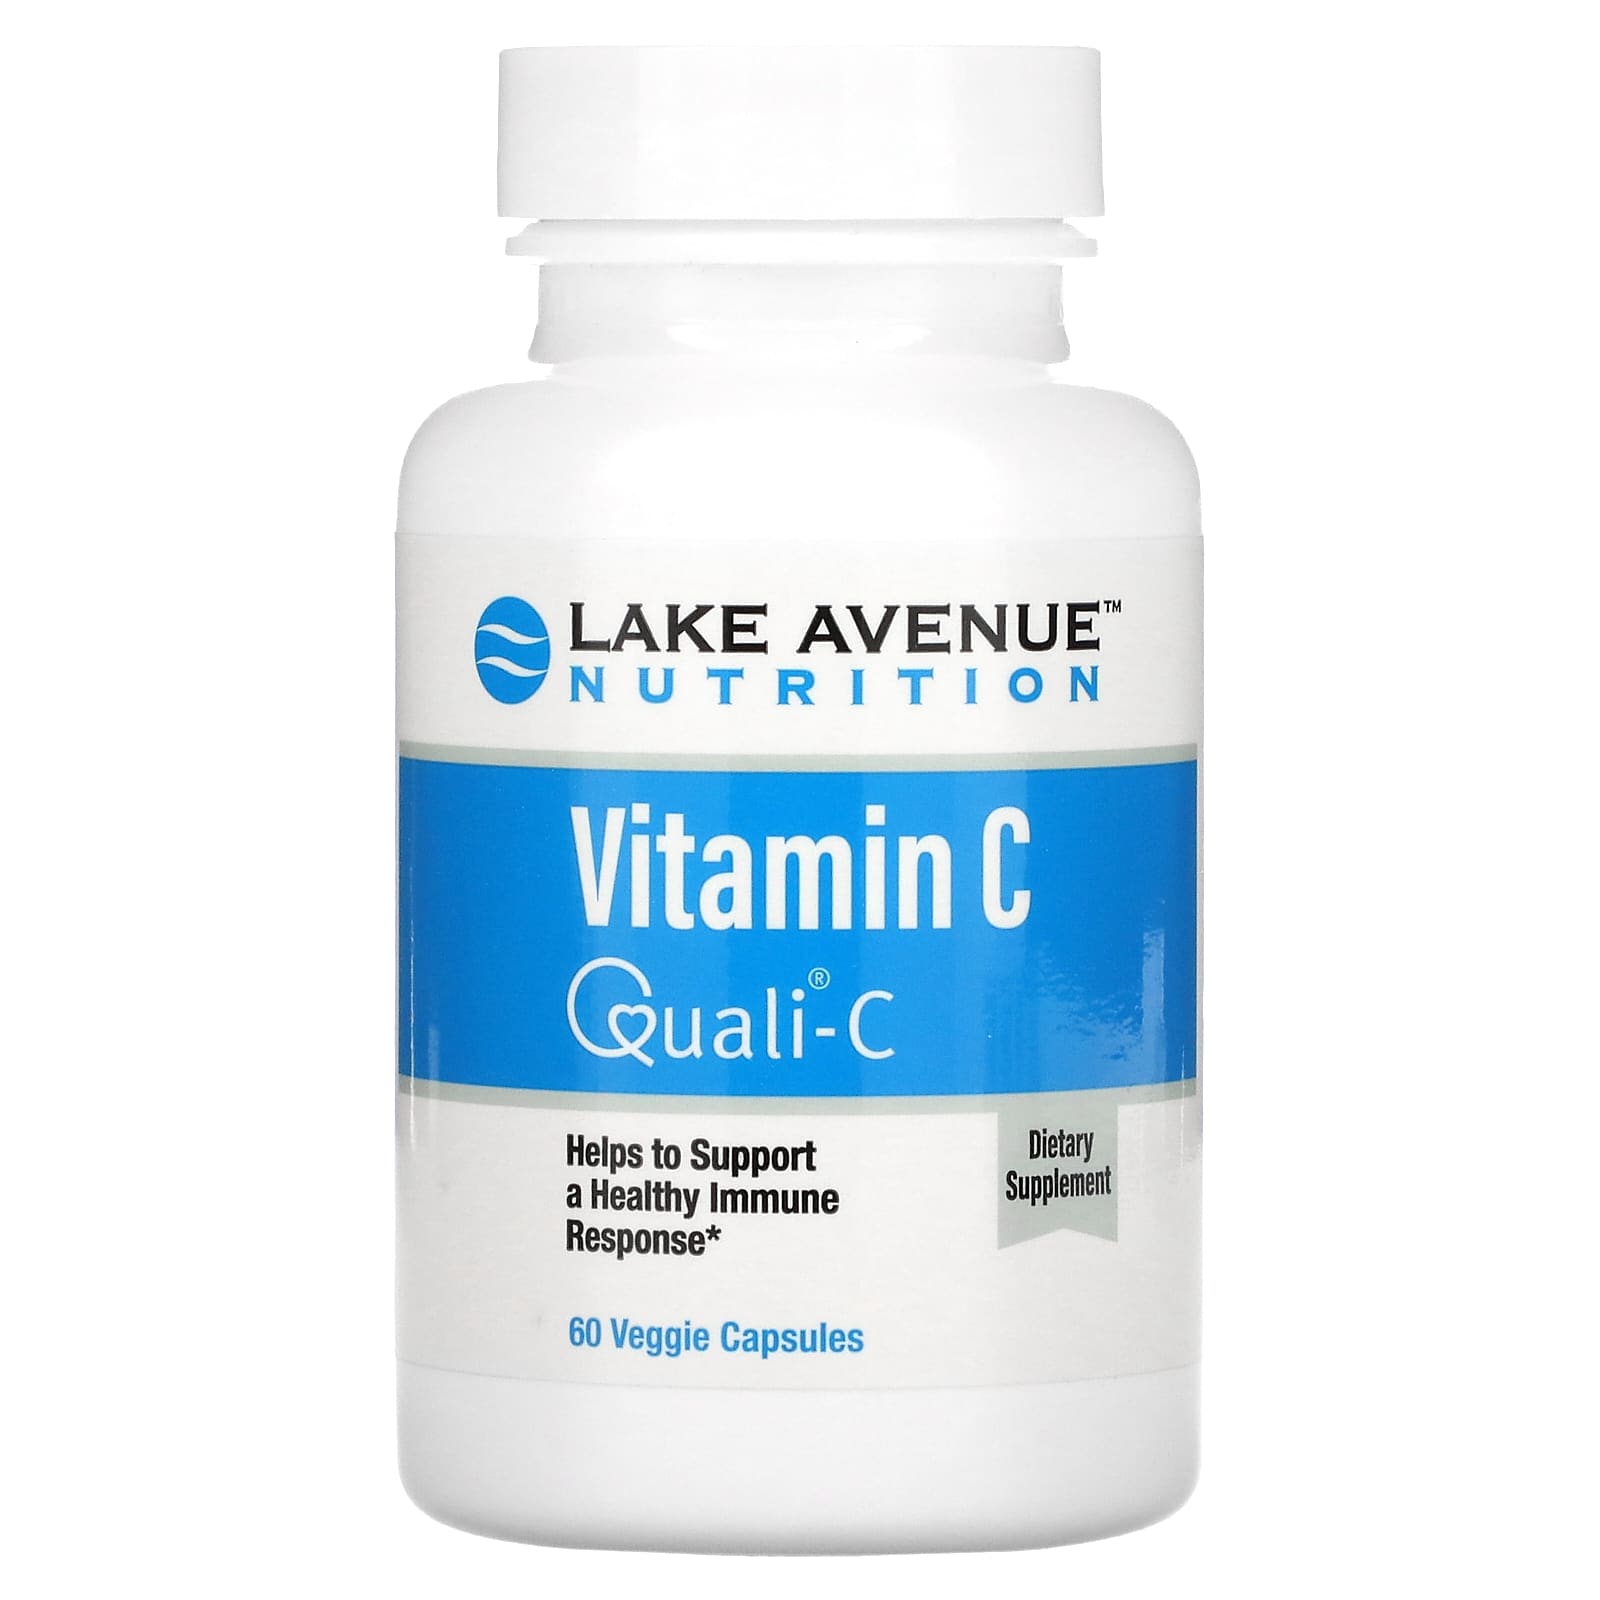 Lake Avenue Nutrition Vitamin C Quali-C Review